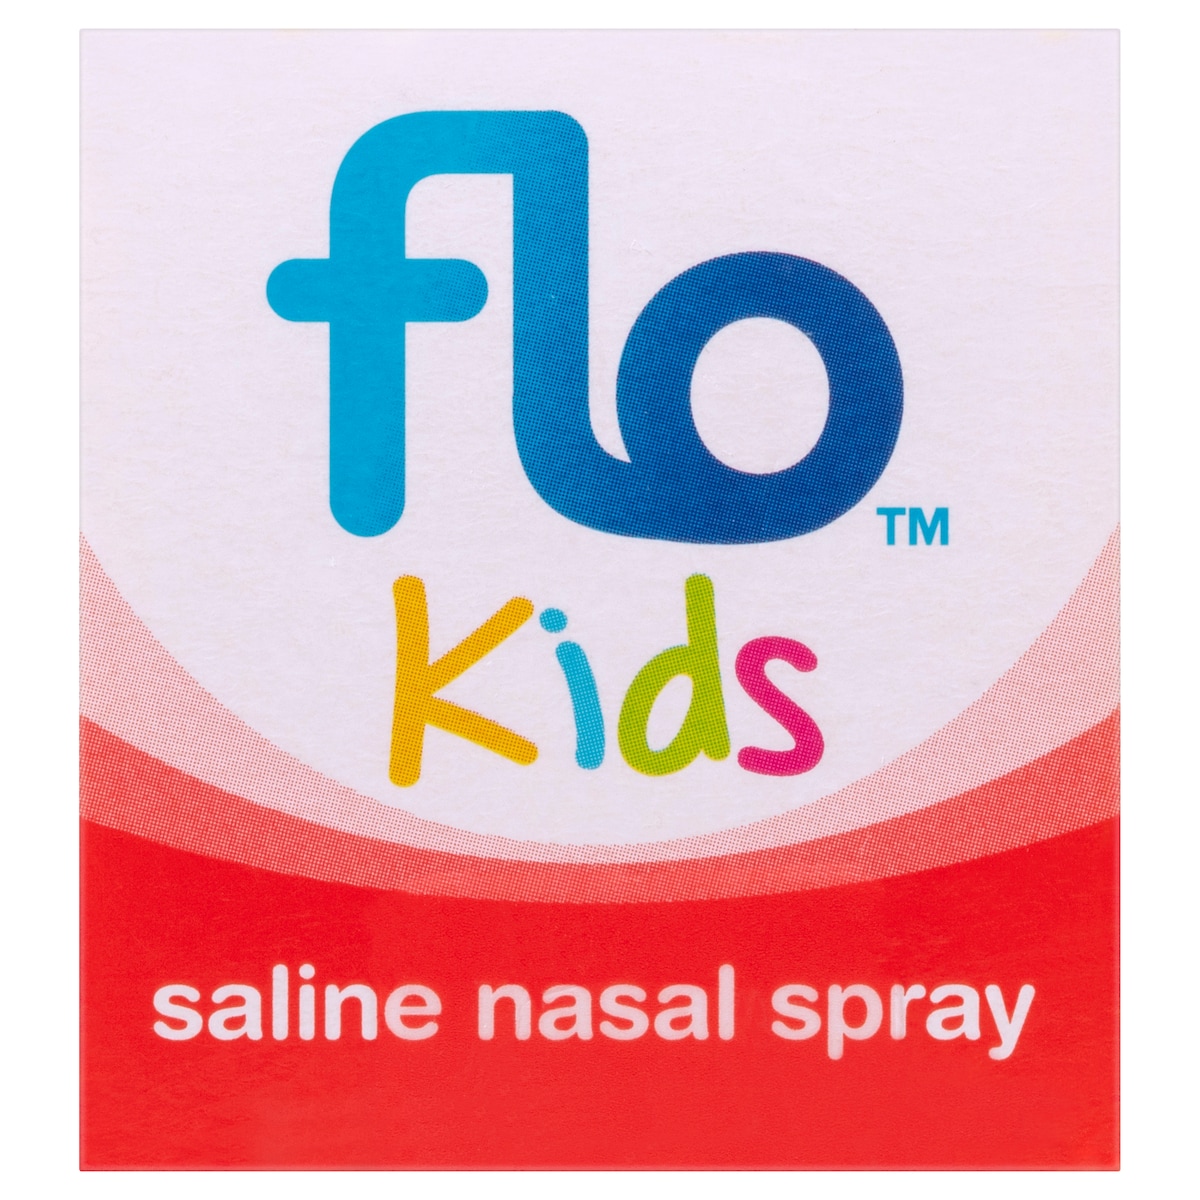 Flo Kids Saline Nasal Spray 15Ml